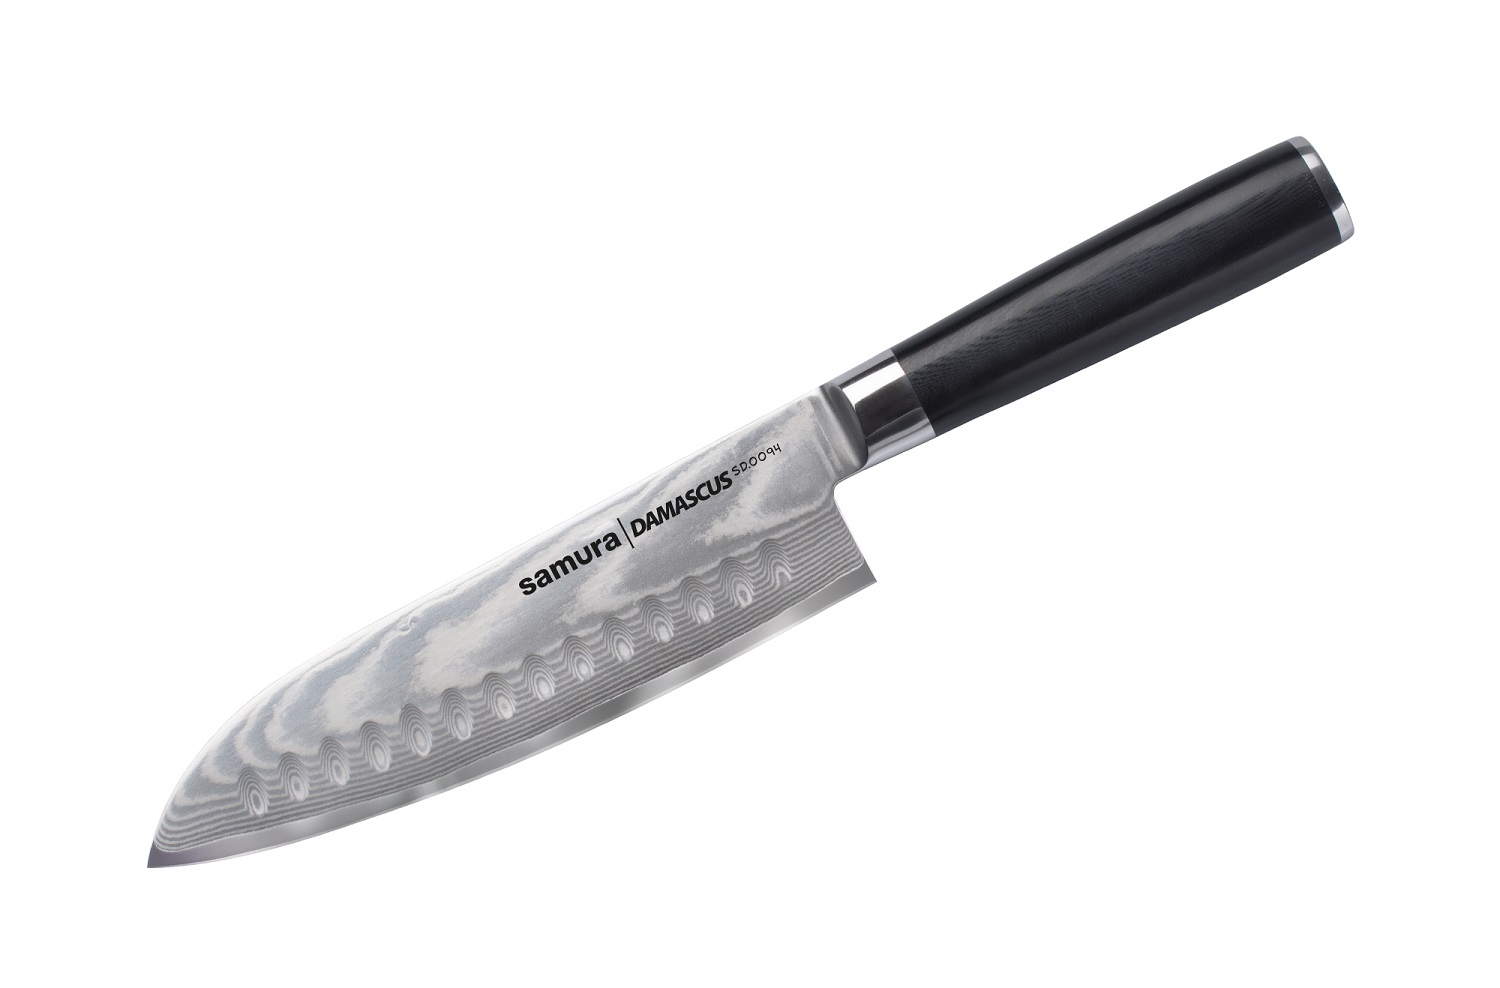 Нож Samura сантоку Damascus, 18 см, G-10, дамаск 67 слоев нож samura универсальный damascus 12 5 см g 10 дамаск 67 слоев